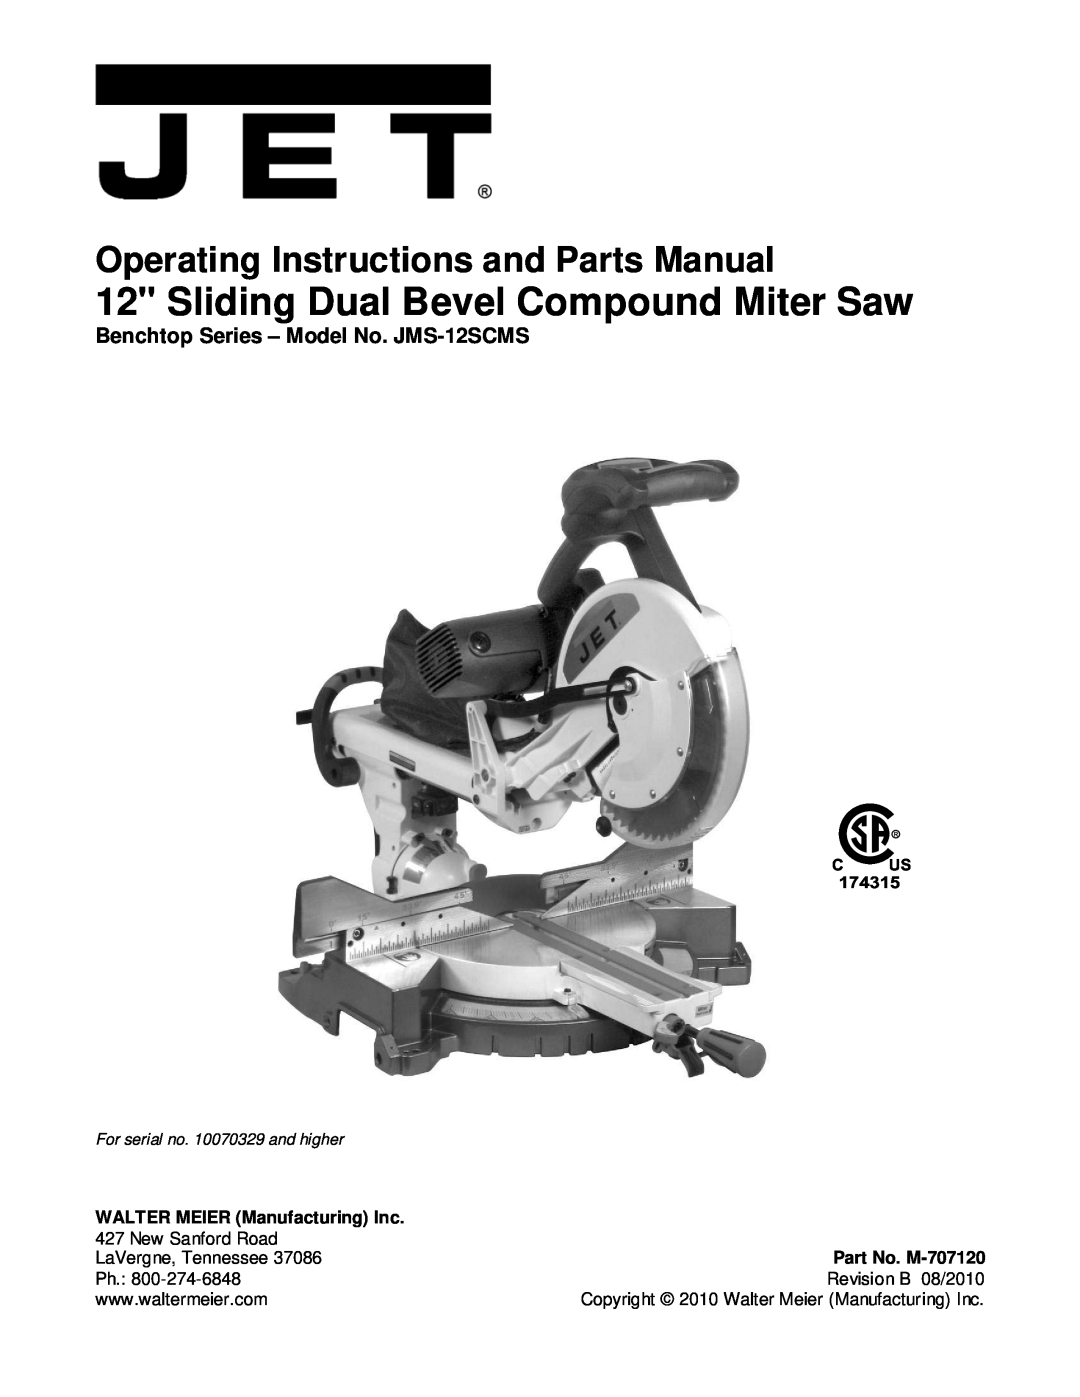 Jet Tools manual Benchtop Series - Model No. JMS-12SCMS, 174315, WALTER MEIER Manufacturing Inc, Part No. M-707120 